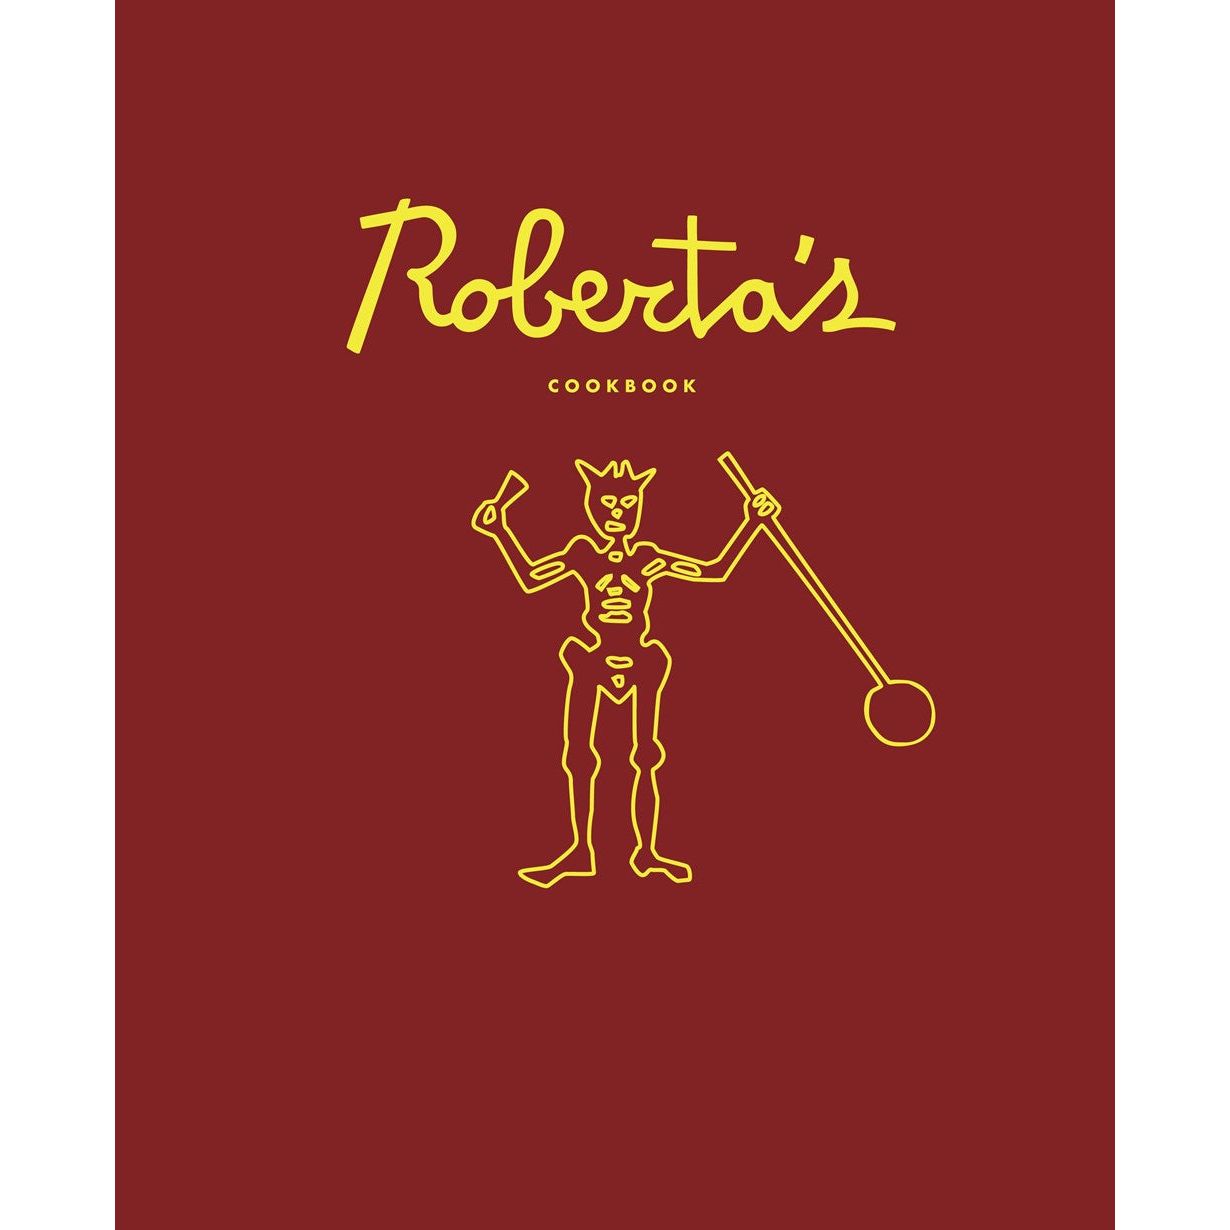 Roberta's Cookbook (Carlo Mirarchi, Brandon Hoy, Chris Parachini, Katherine Wheelock)